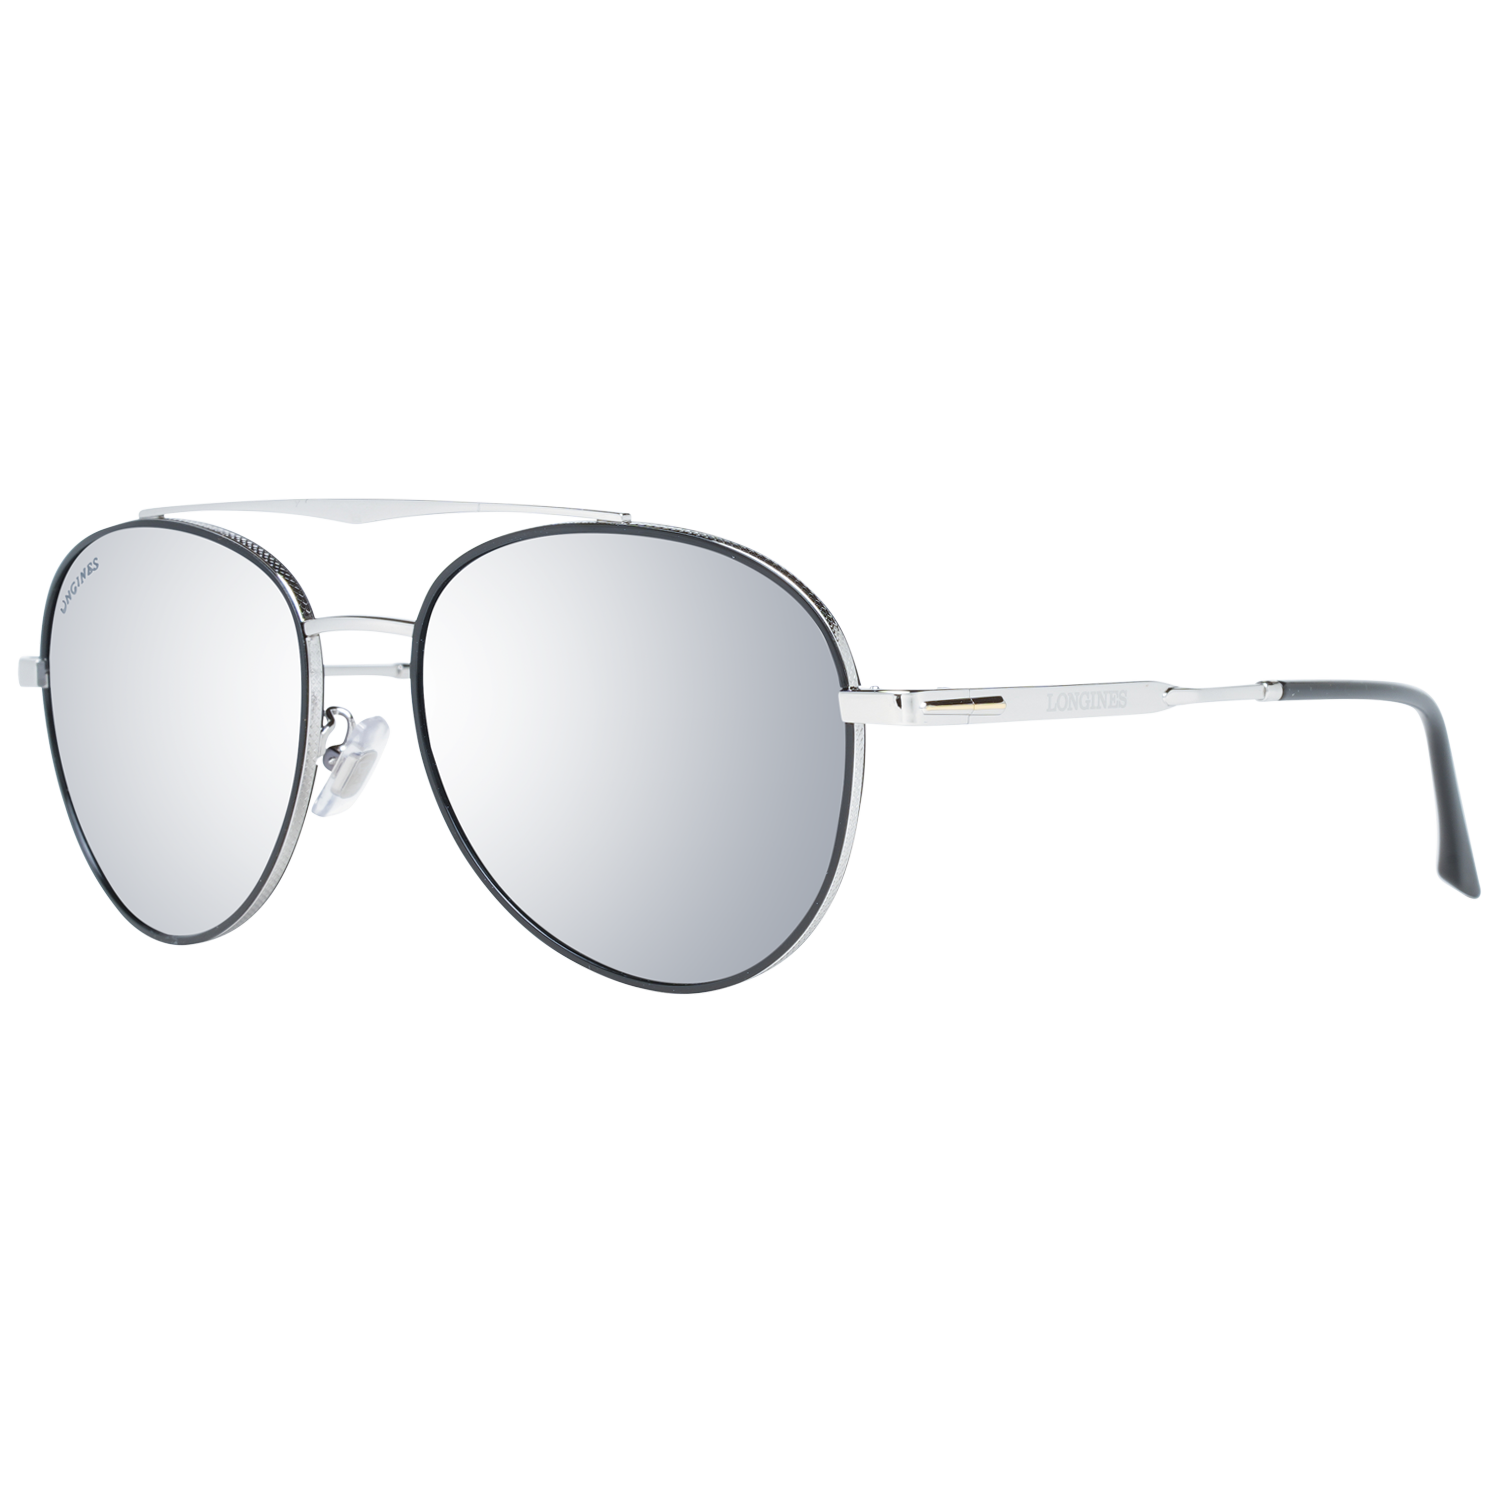 Longines Sunglasses Longines Sunglasses LG0007-H 16C 56 Mirrored Eyeglasses Eyewear UK USA Australia 